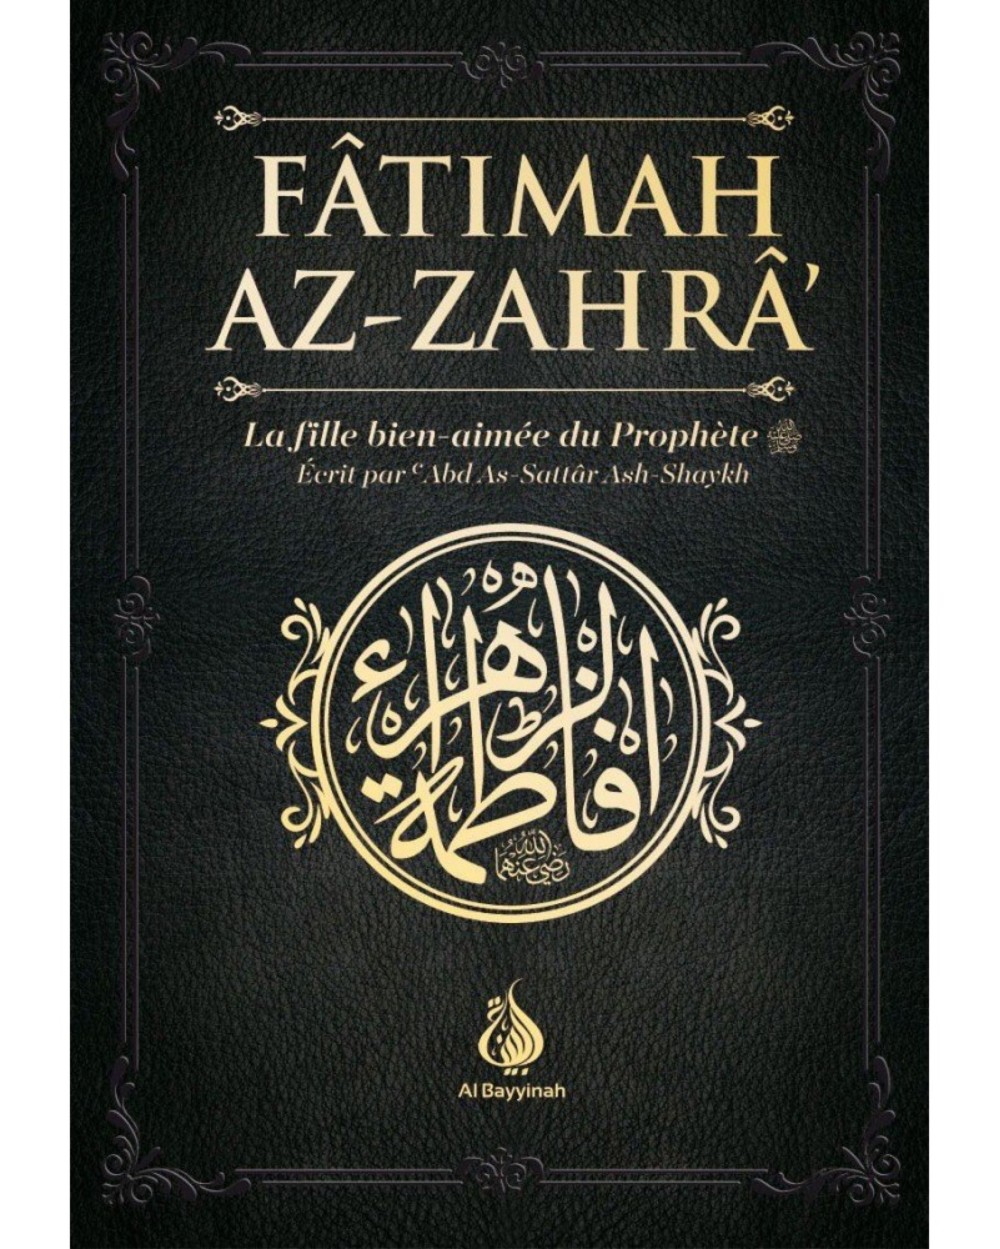 Fatimah Az-Zahra - The beloved daughter of the Prophet